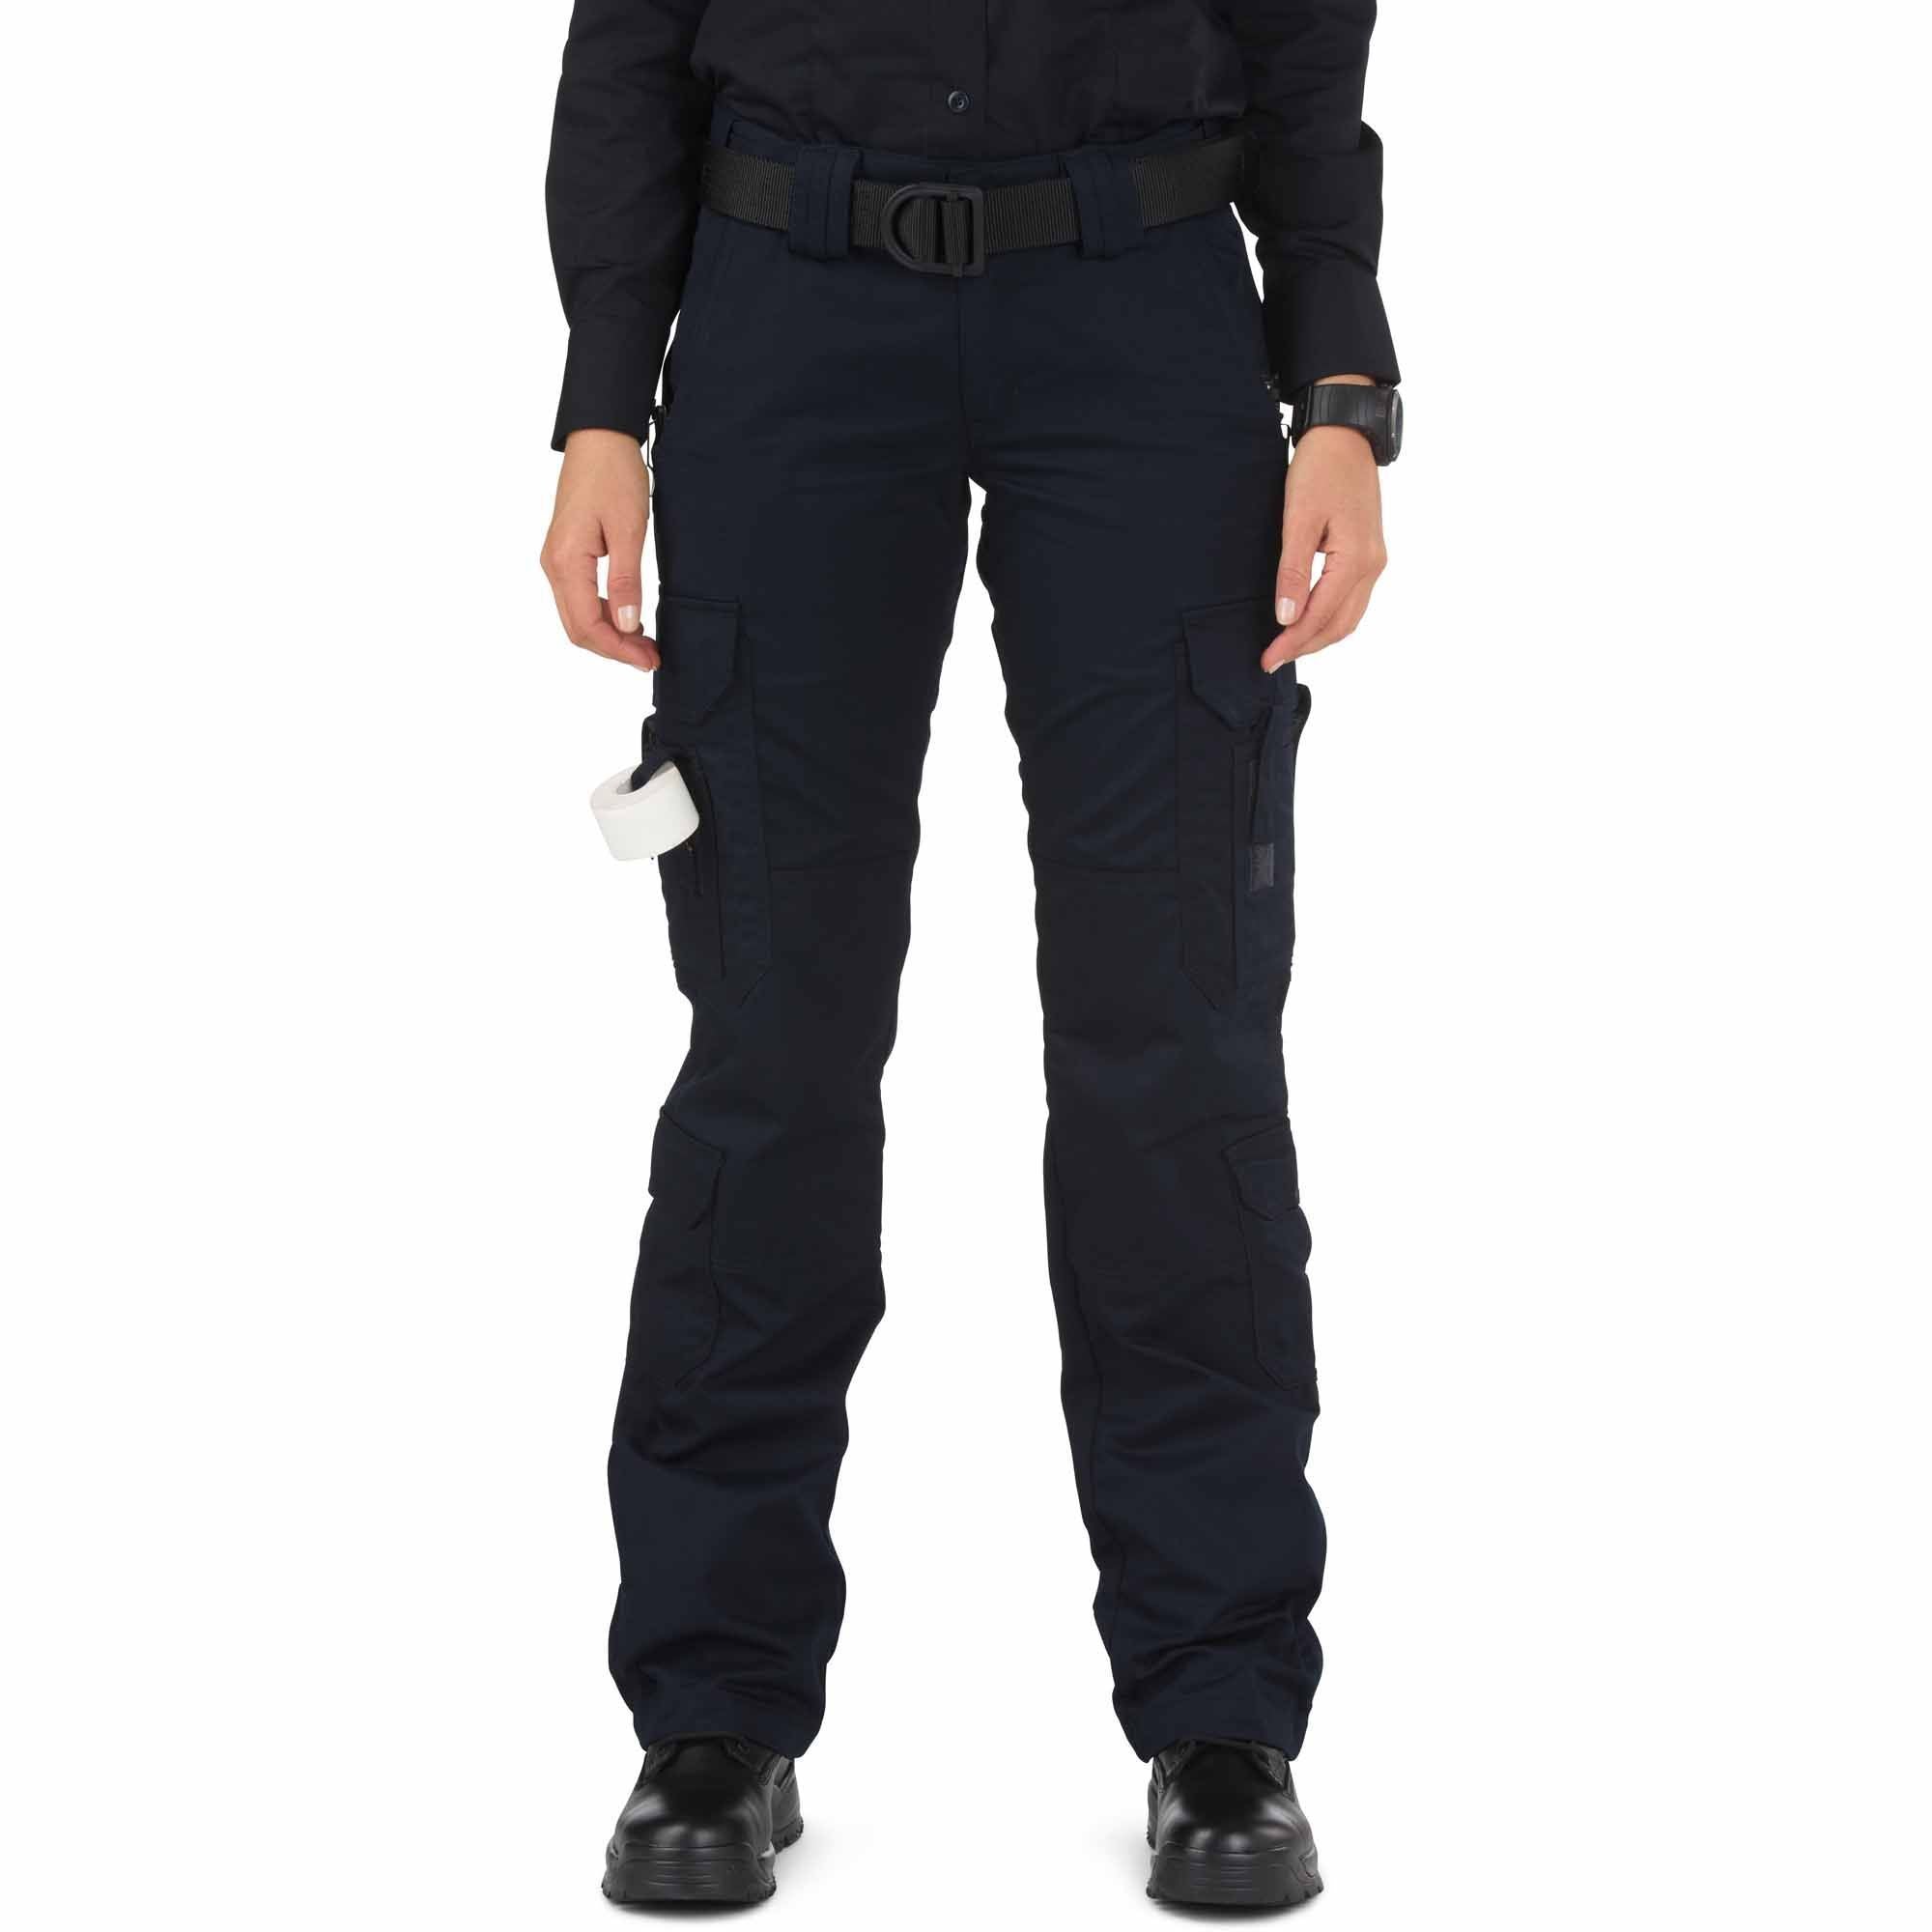 5.11 Women's TACLITE EMS Pant Dark Navy Pants 5.11 Tactical 2 Regular Tactical Gear Supplier Tactical Distributors Australia